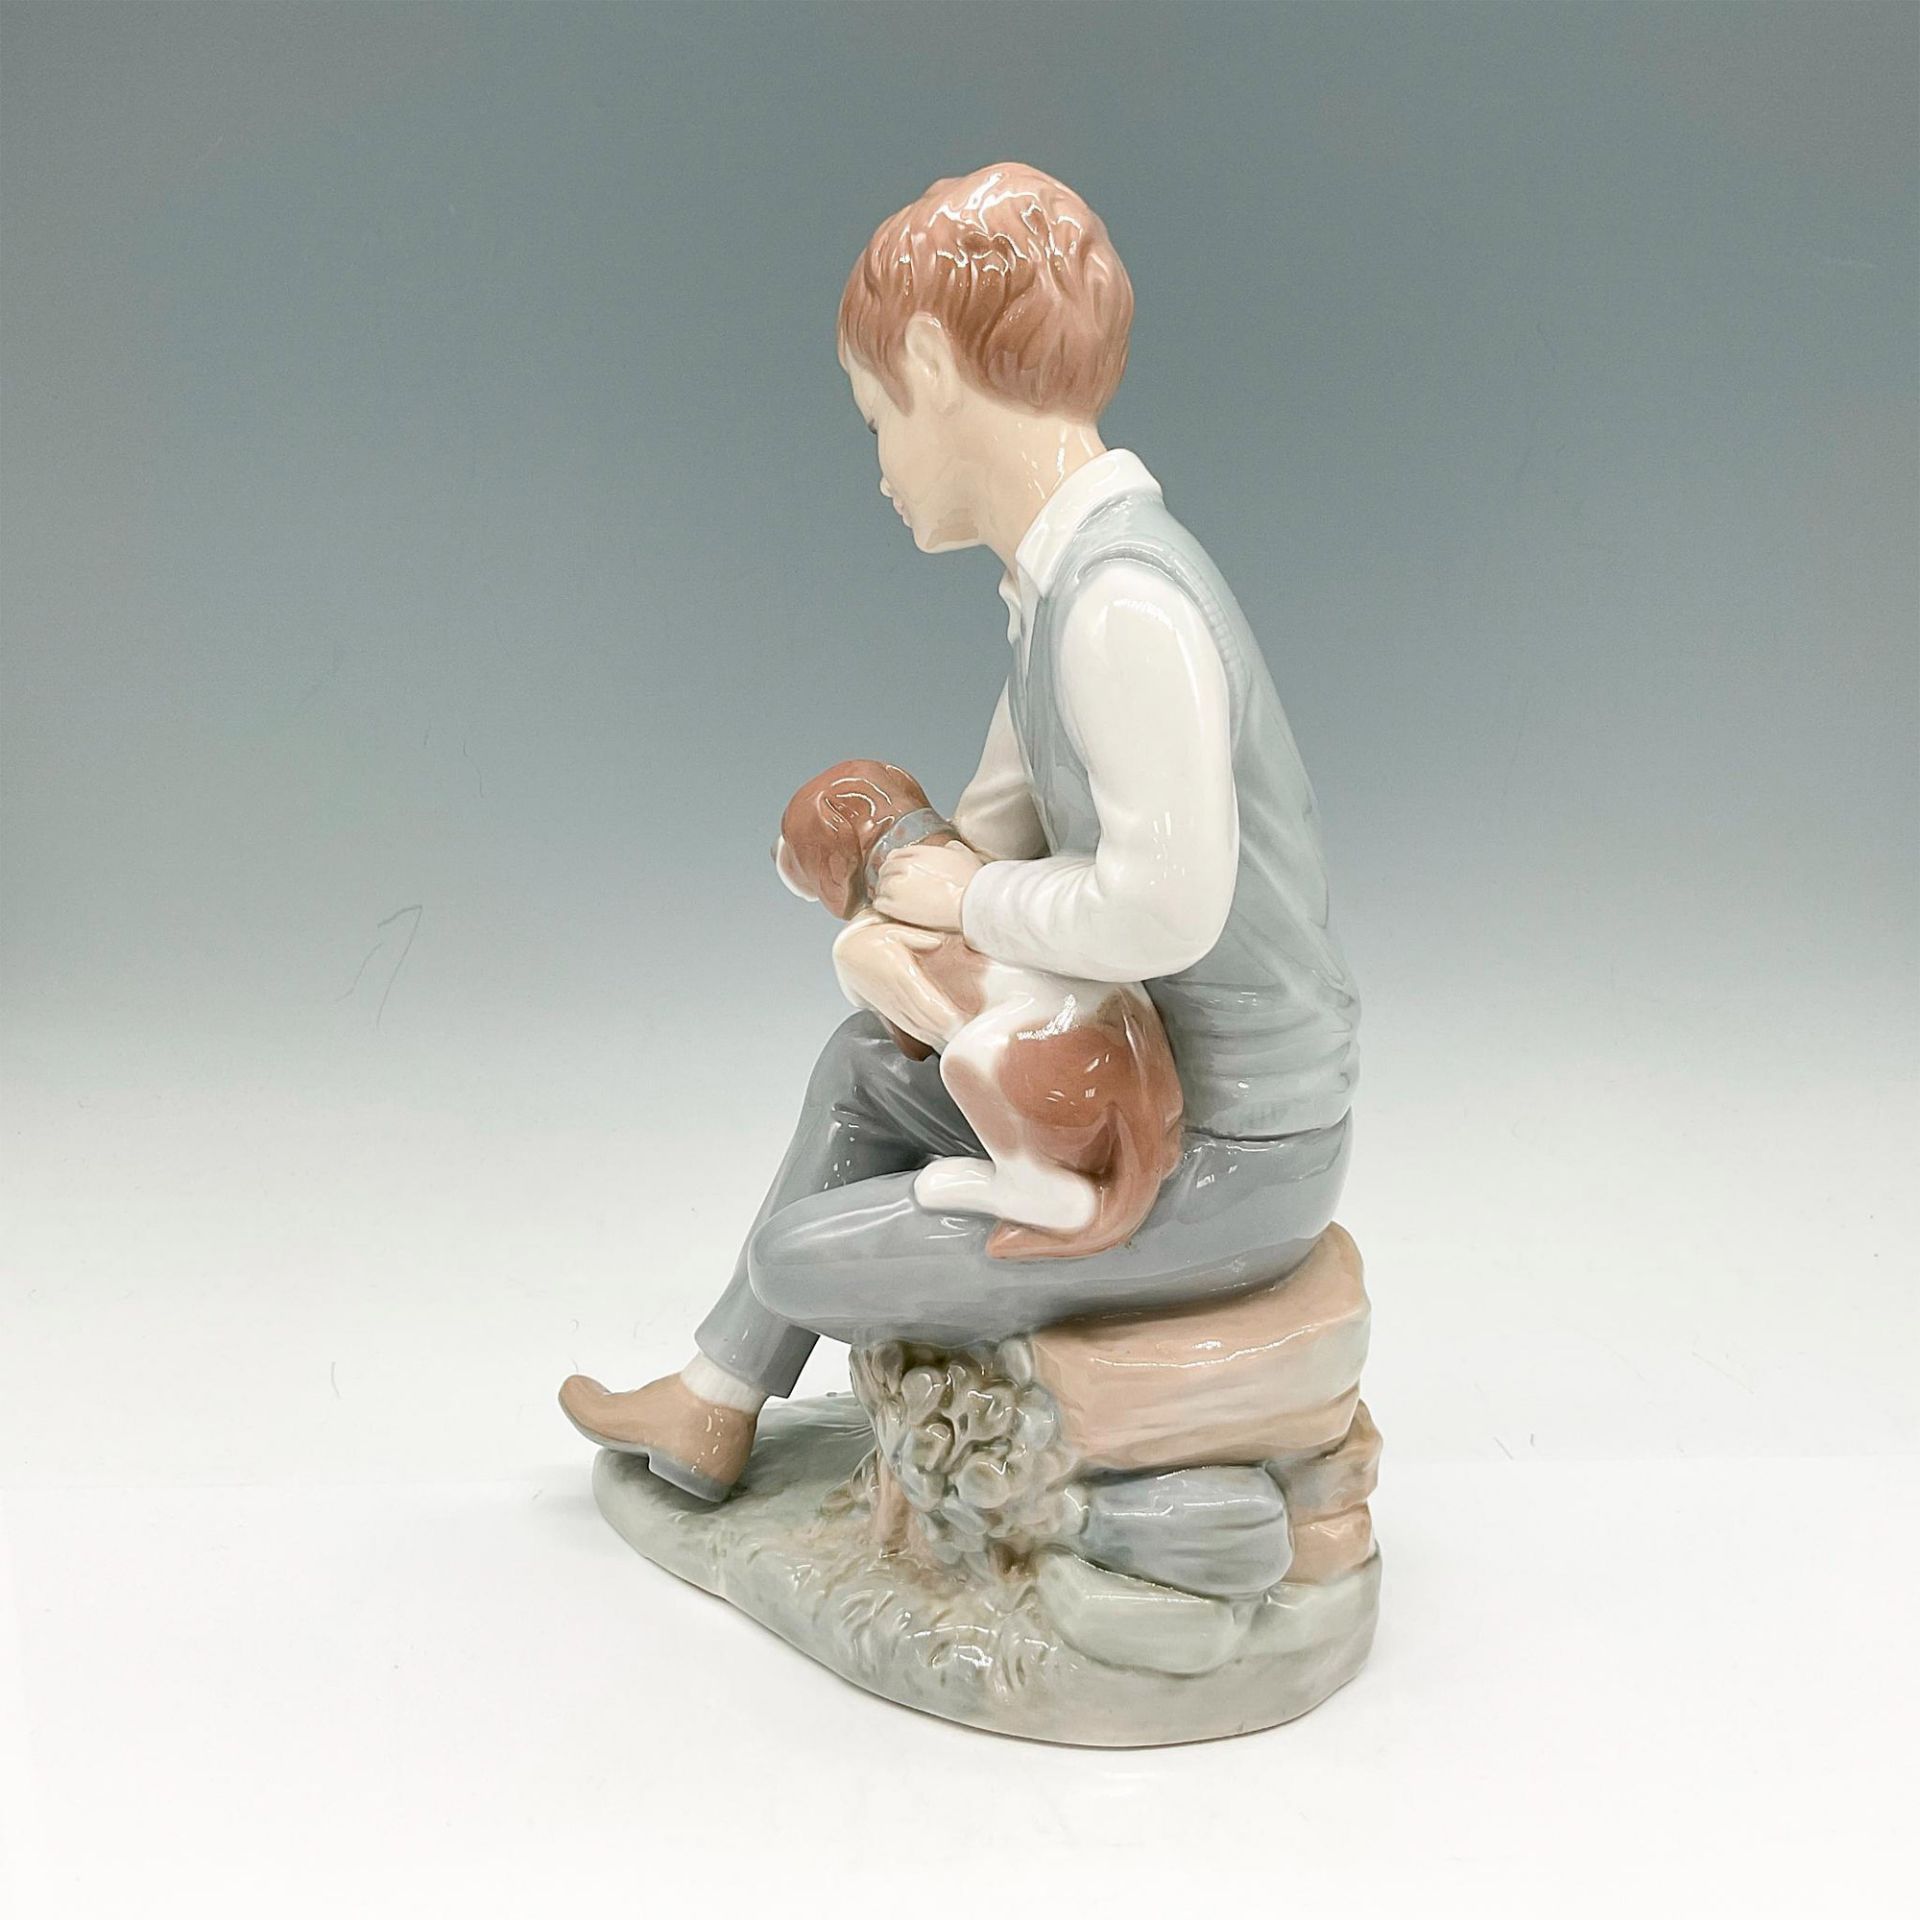 Zaphir Porcelain Figurine, Boy with Dog - Image 2 of 4